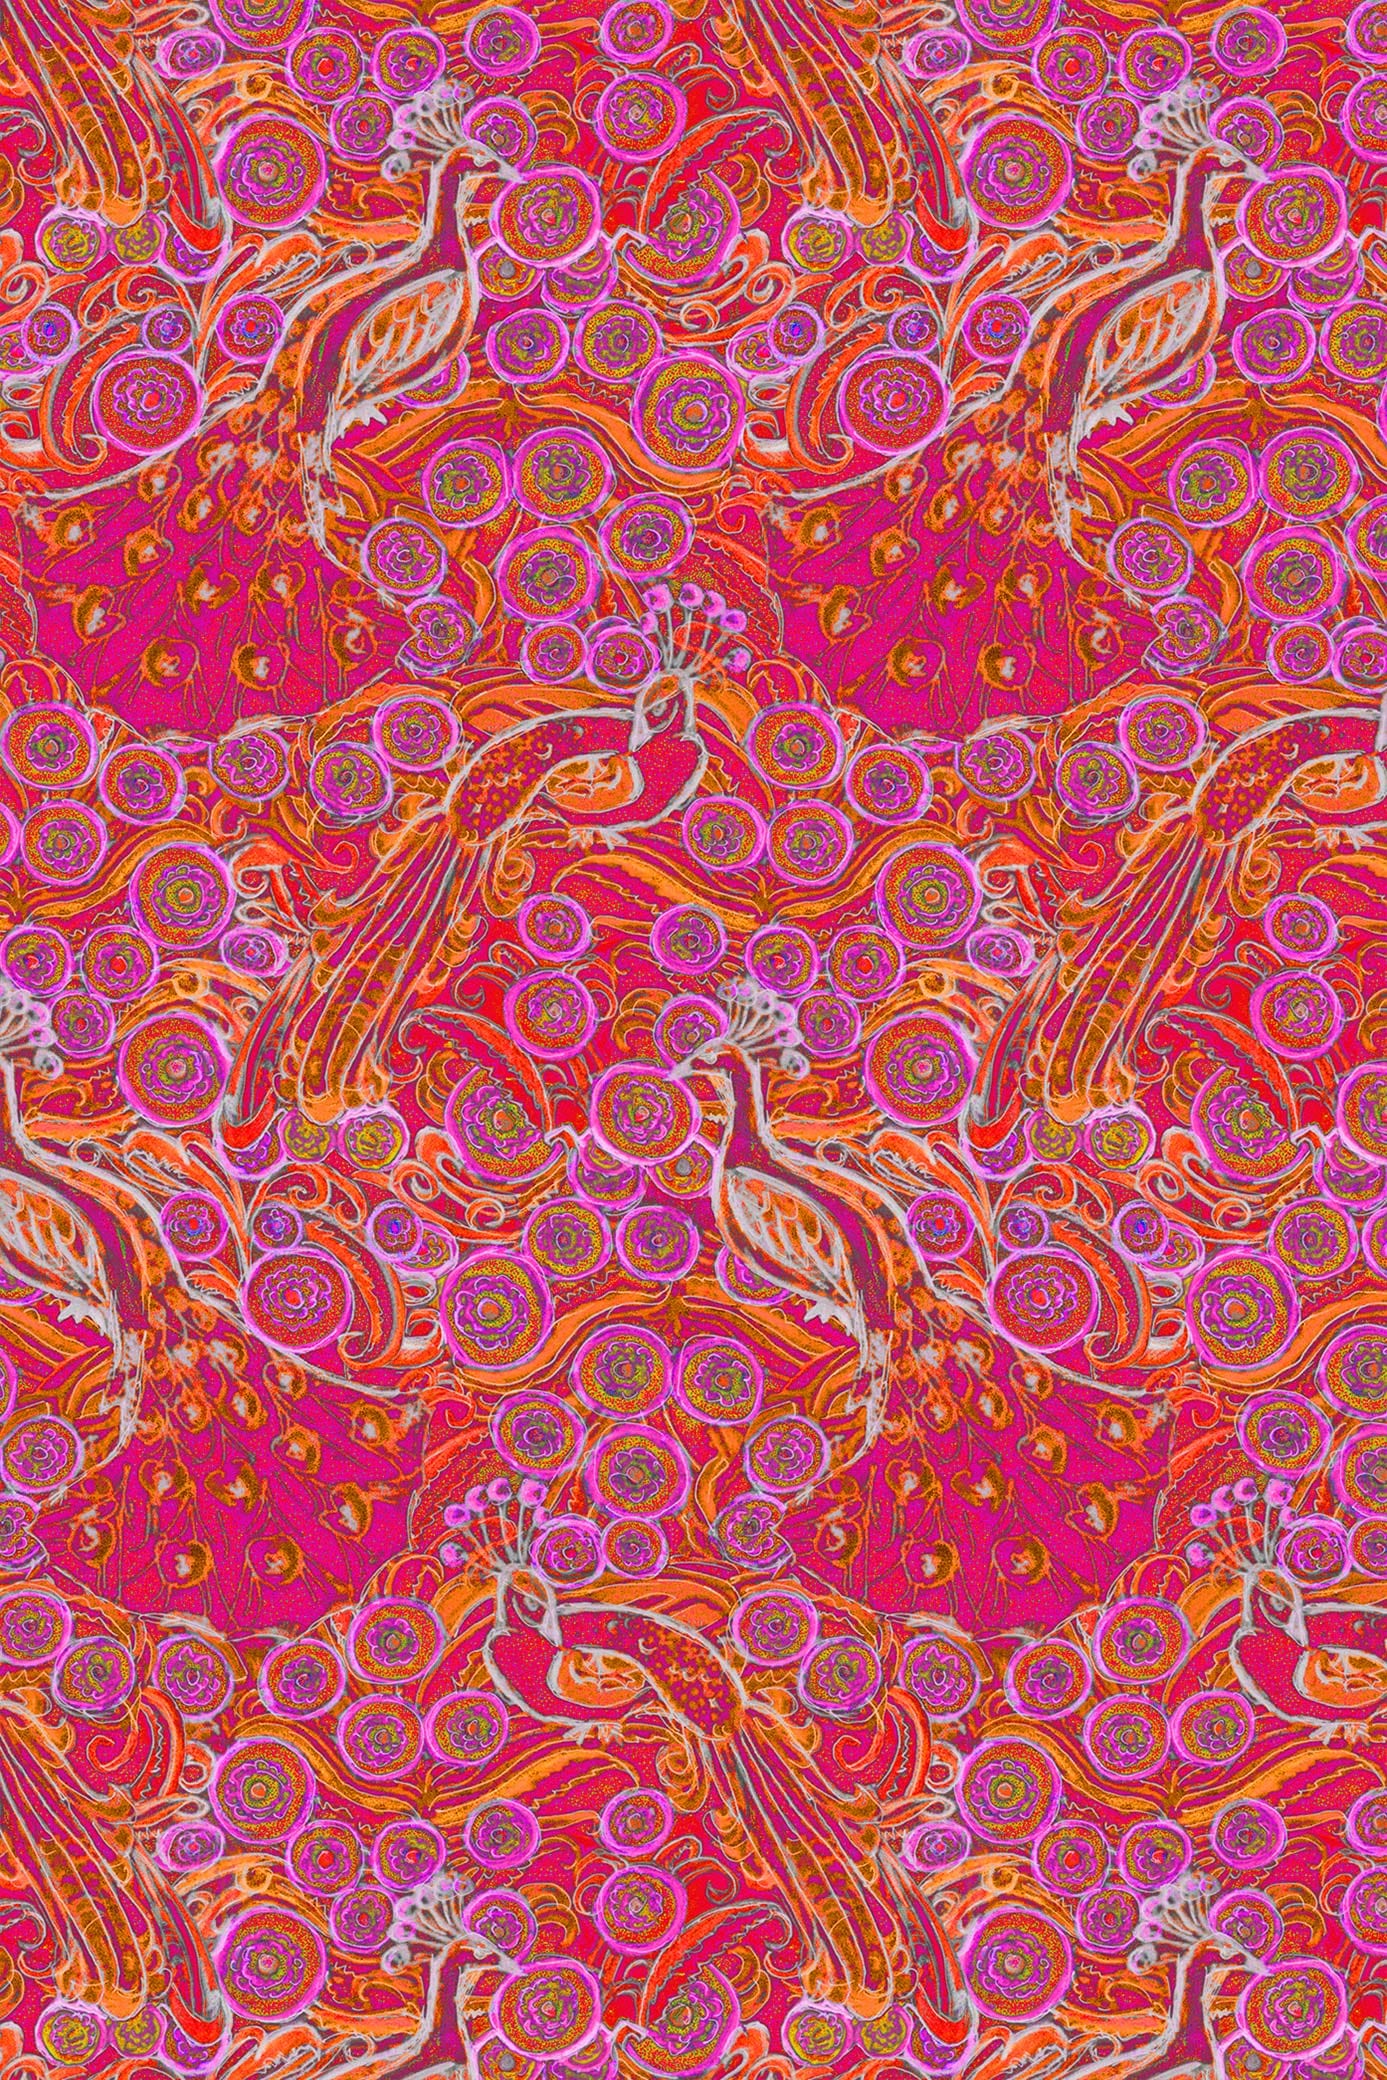 W.E.T. by Ines Schneider Blouse Blouse Romy 22 / Pavone mode hamburg print sommerkleid Unique Prints Summer Dress Handdesignierte Prints Print